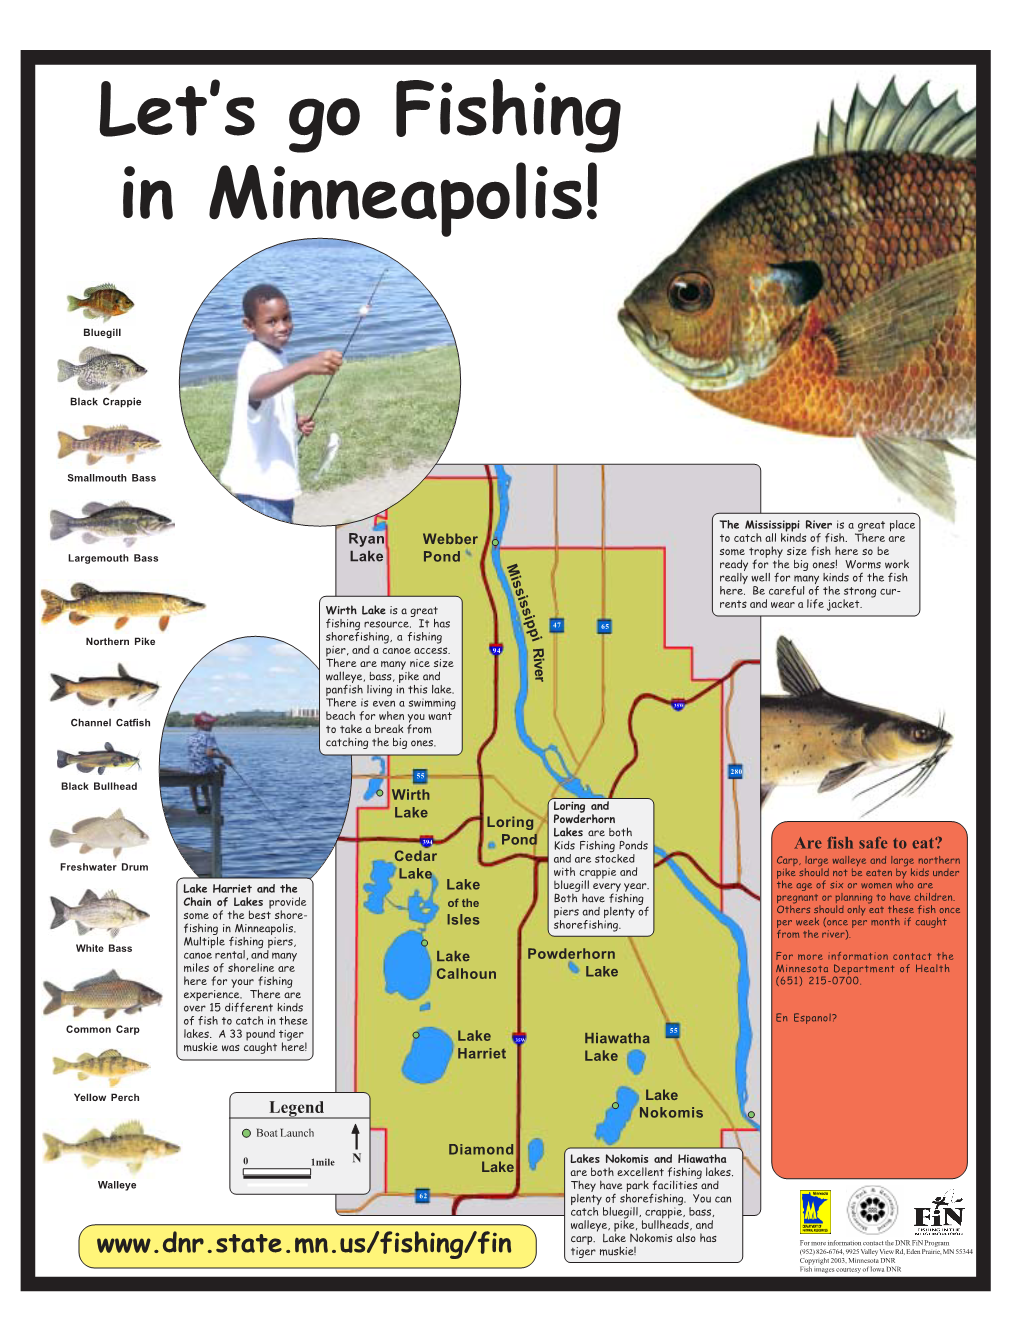 Let's Go Fishing in Minneapolis!